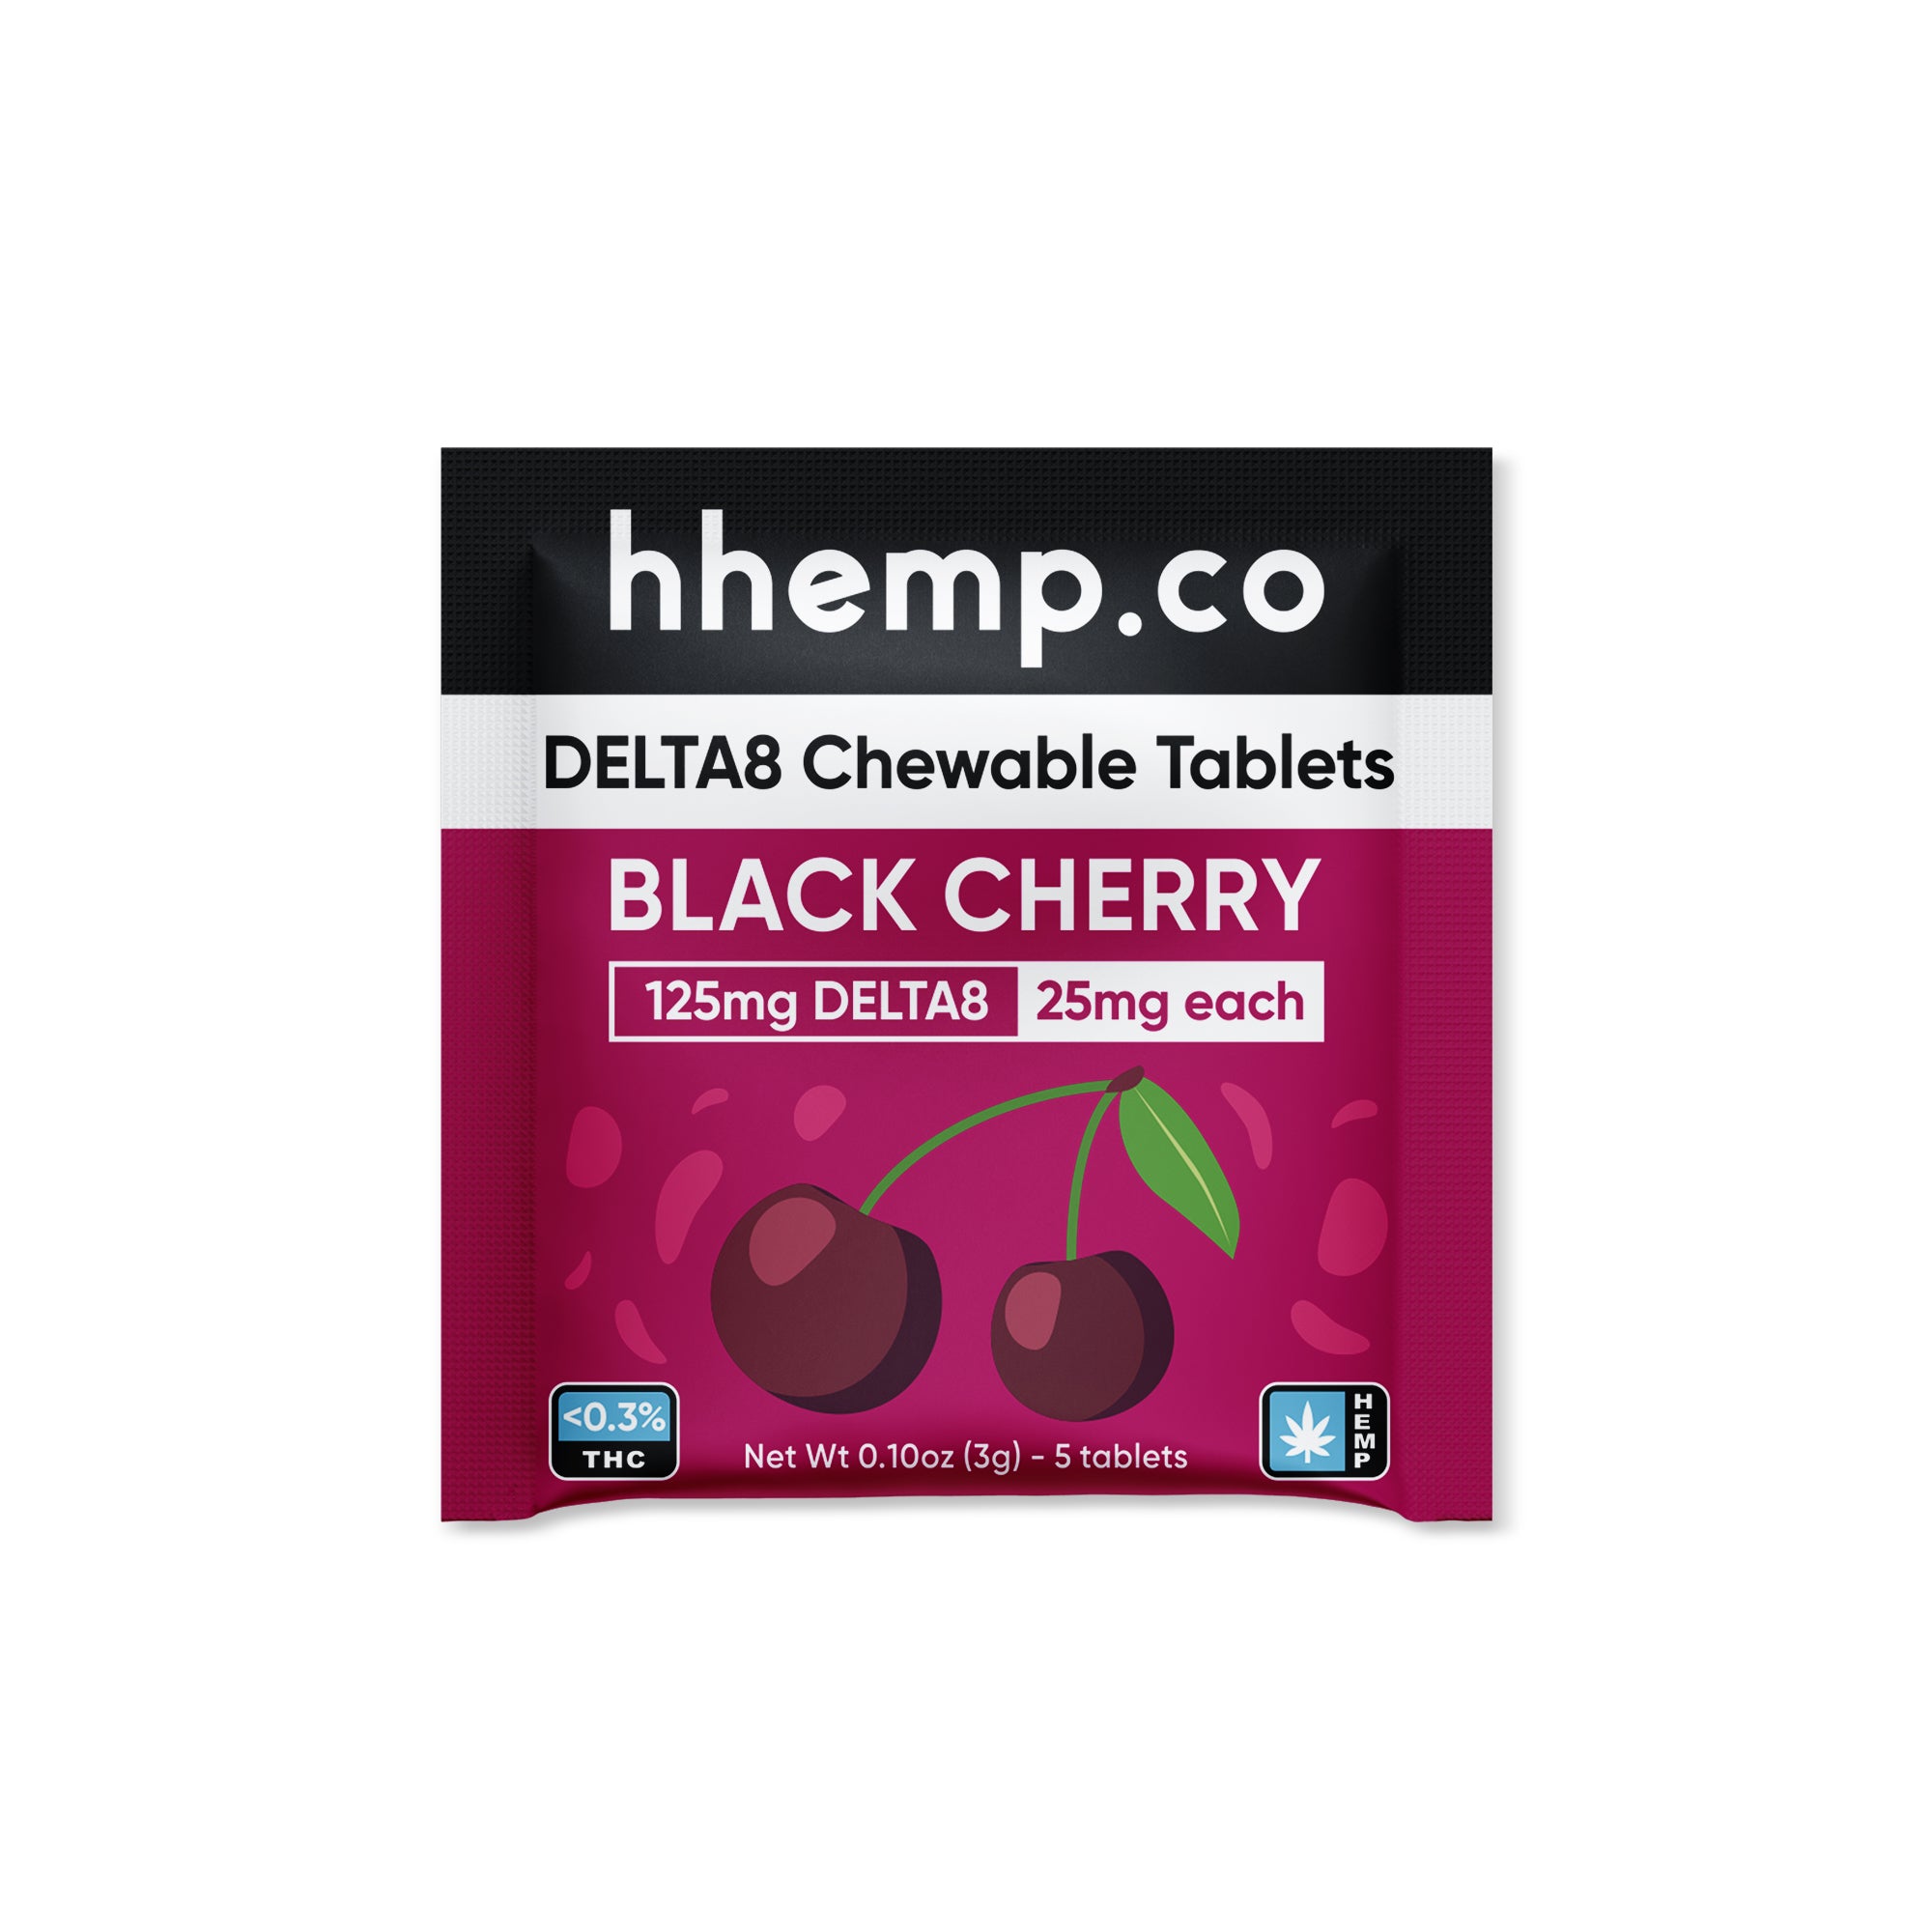 hhemp.co Delta 8 Chewable - Black Cherry